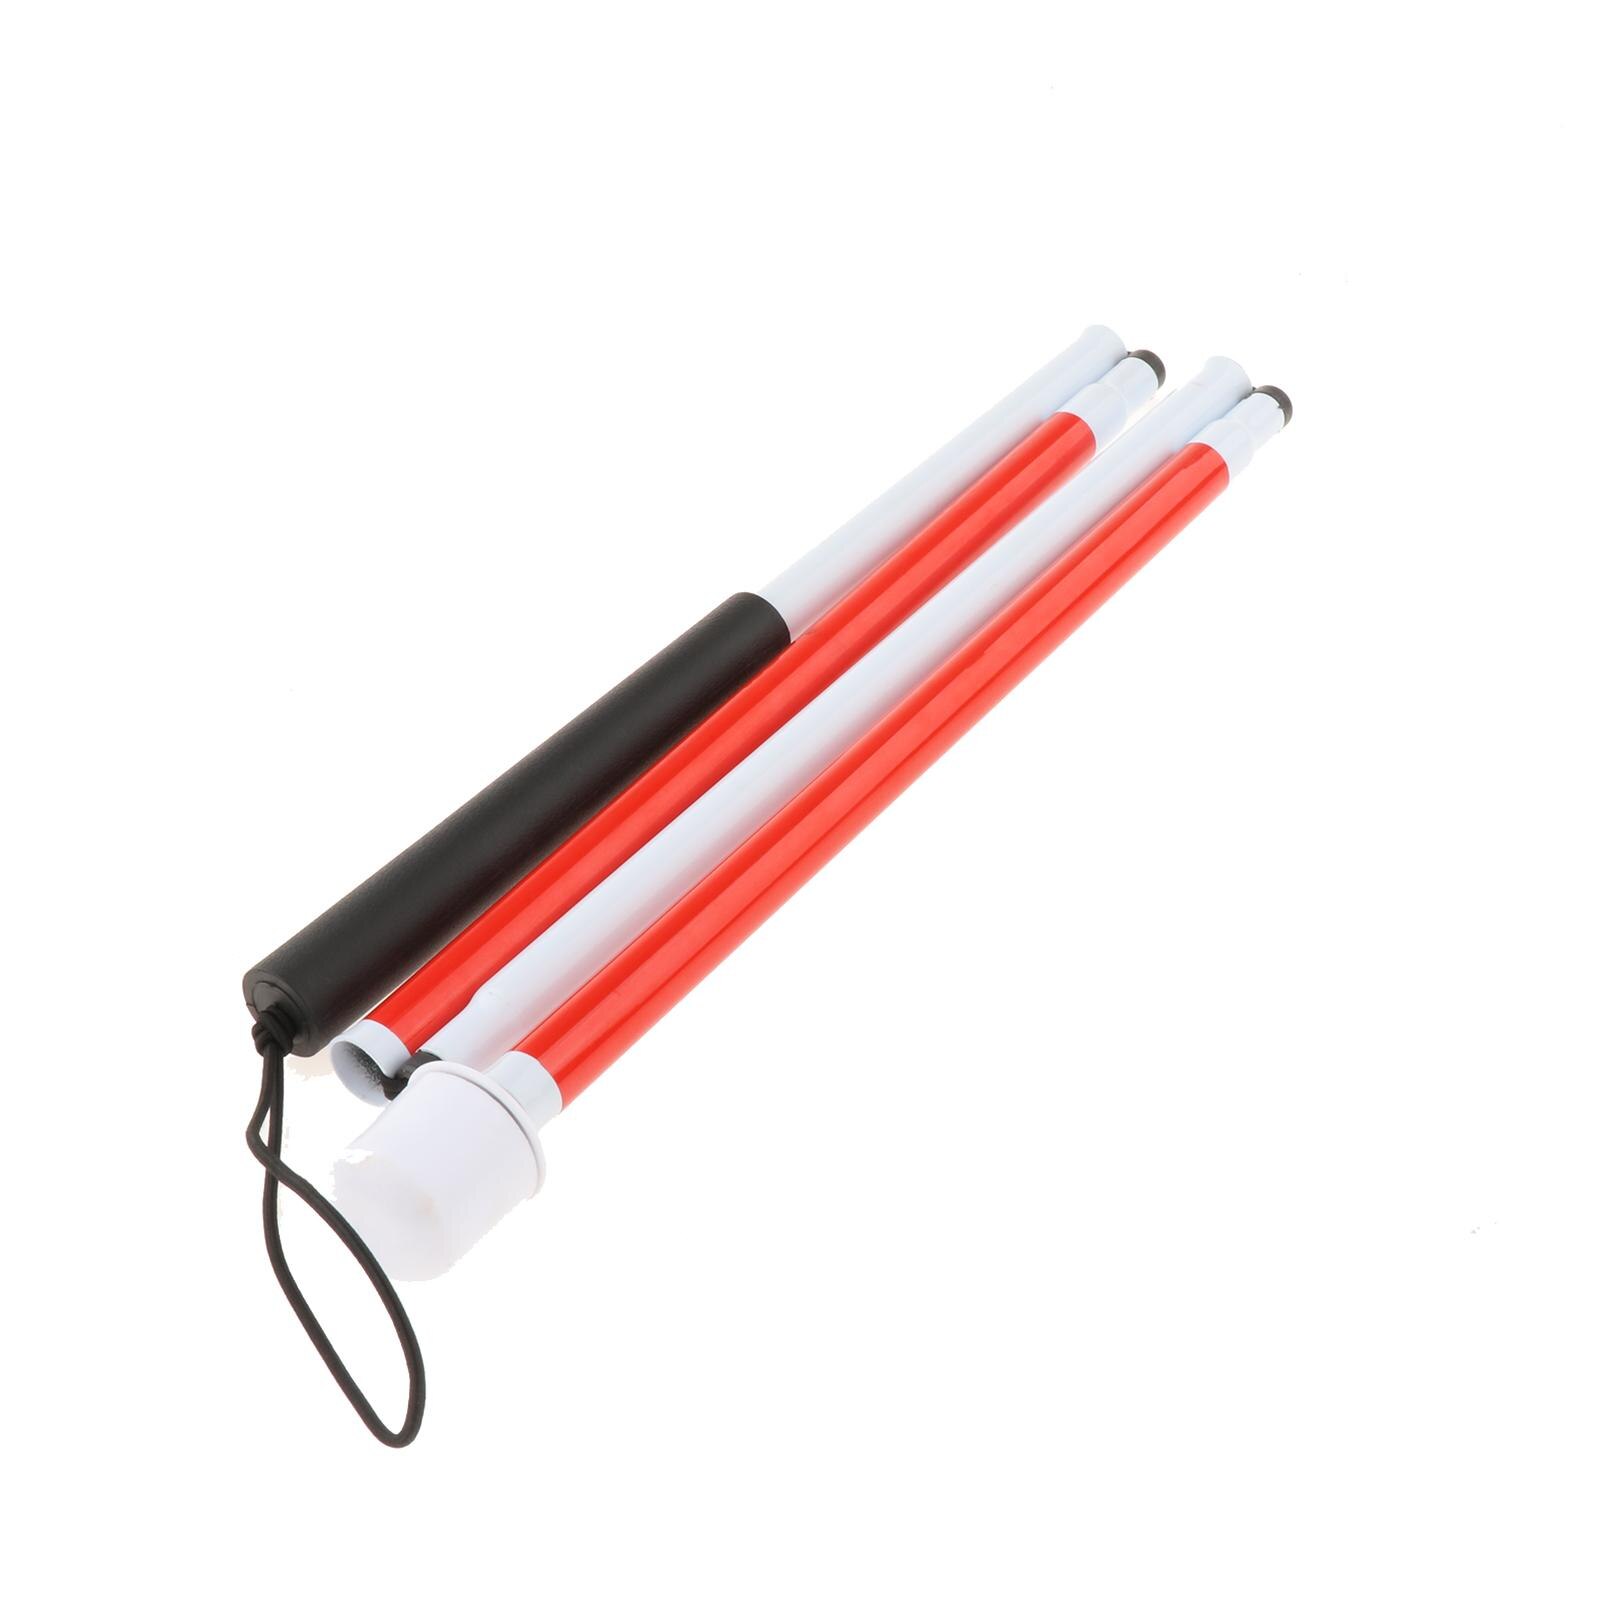 Folding Blind Cane Mobility Cane Lightweight Adjustable 4 Sections Blind Stick Trekking Pole Crutch Cane for Men Women